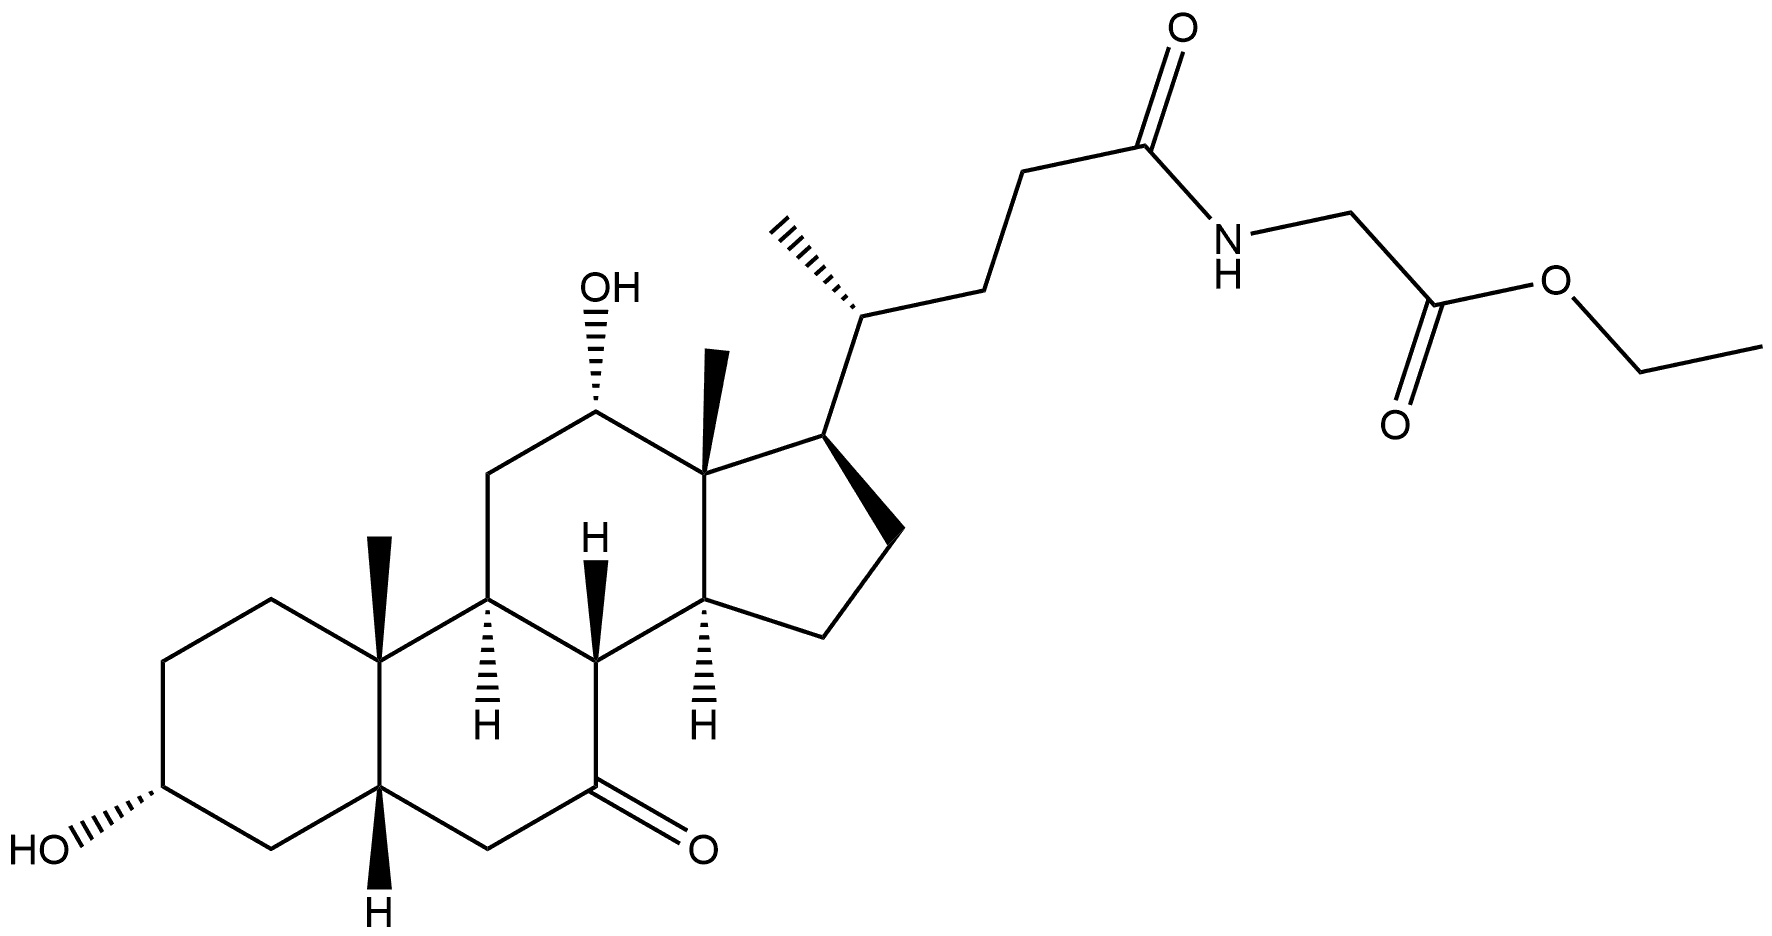 7-keto methyl ester of glicocholate metabolite|7-KETO METHYL ESTER OF GLICOCHOLATE METABOLITE